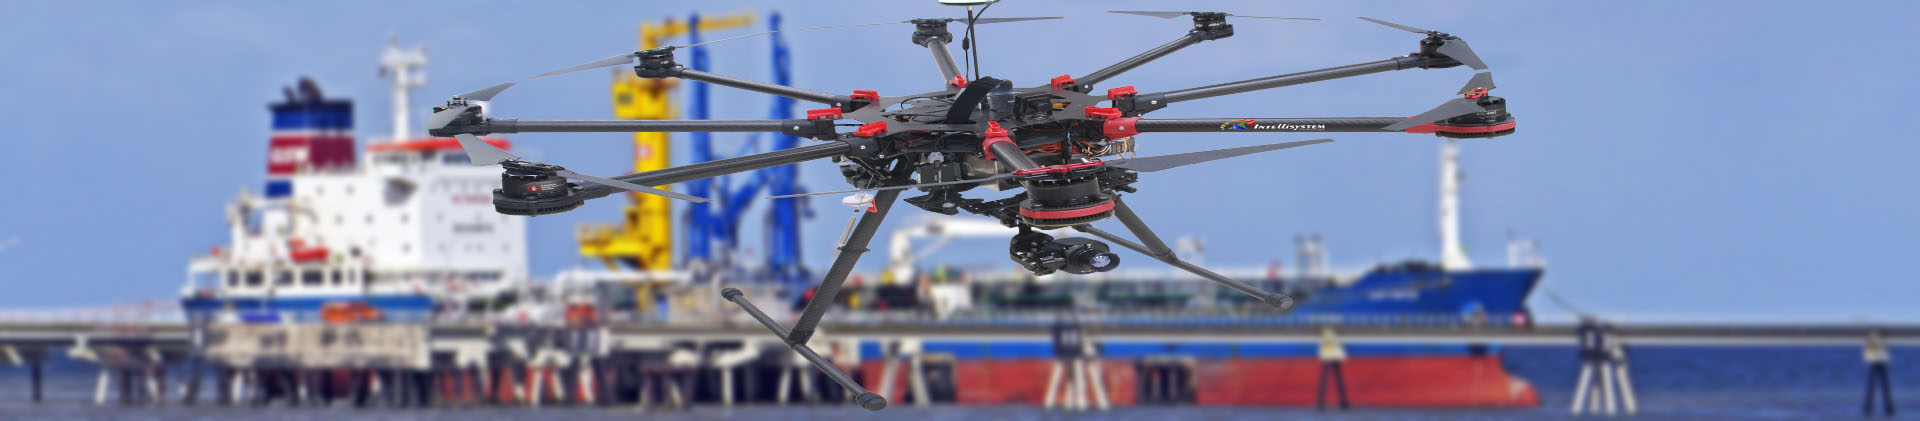 DRONE UAS UAV INSPECTION & MONITORING By Intellisystem Technologies